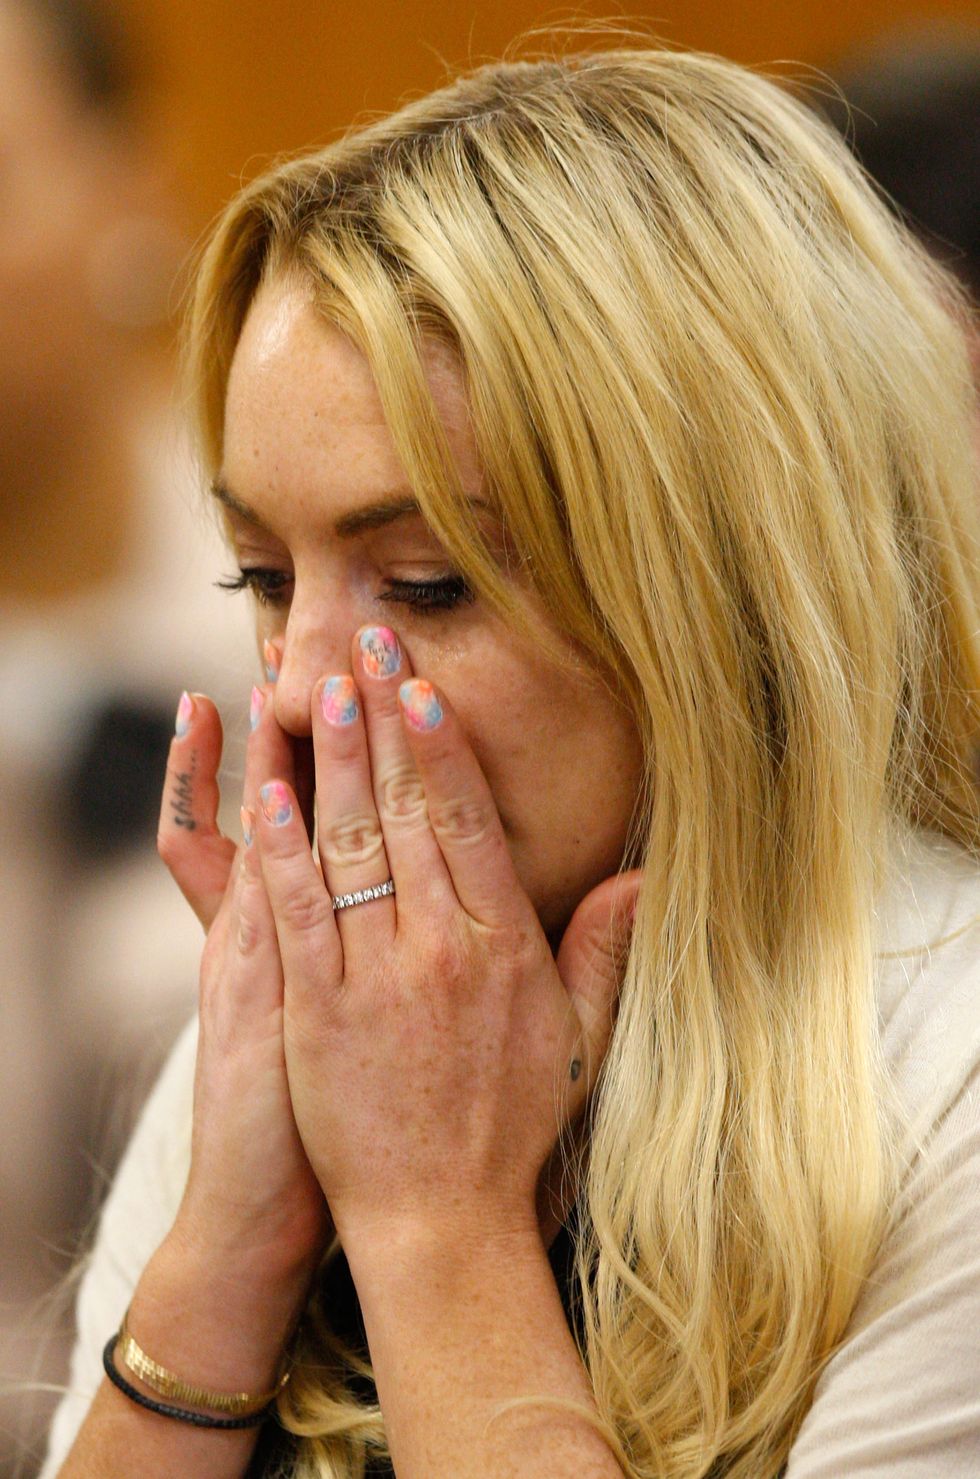 Lindsay Lohan Probation Hearing